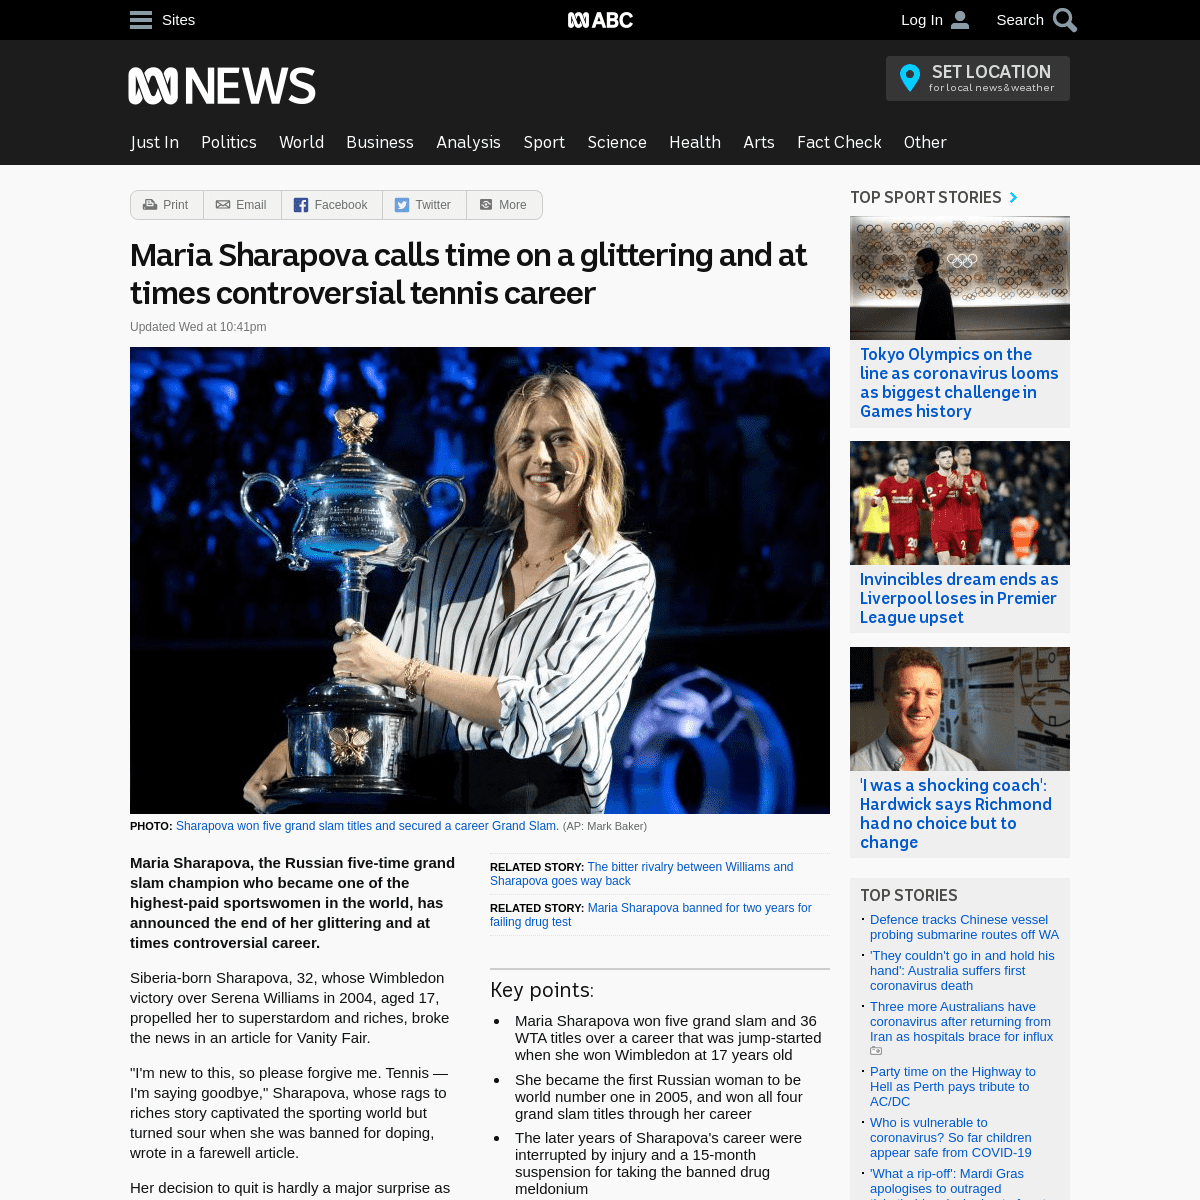 A complete backup of www.abc.net.au/news/2020-02-27/russian-tennis-champ-maria-sharapova-announces-her-retirement/12005304